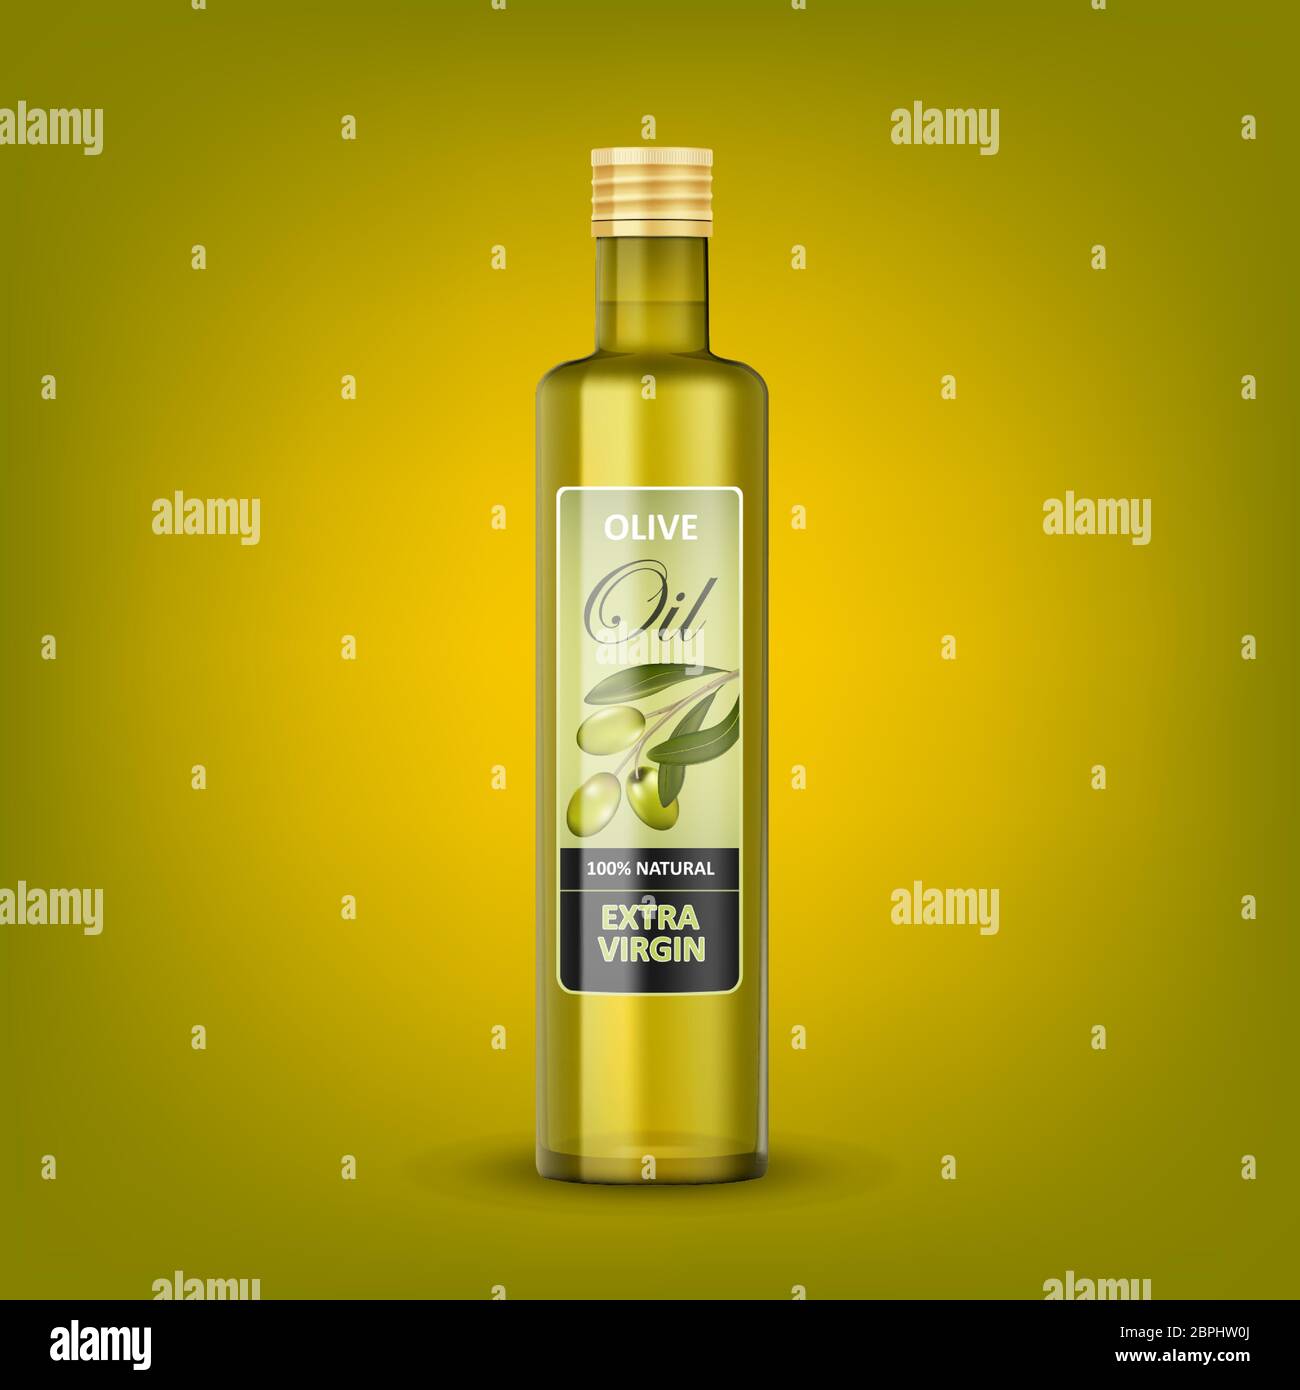 Download Glass Transparent Olive Oil Bottle Mockup Isolated Green Olive Oil Package Design Vector 3d Illustration Stock Vector Image Art Alamy